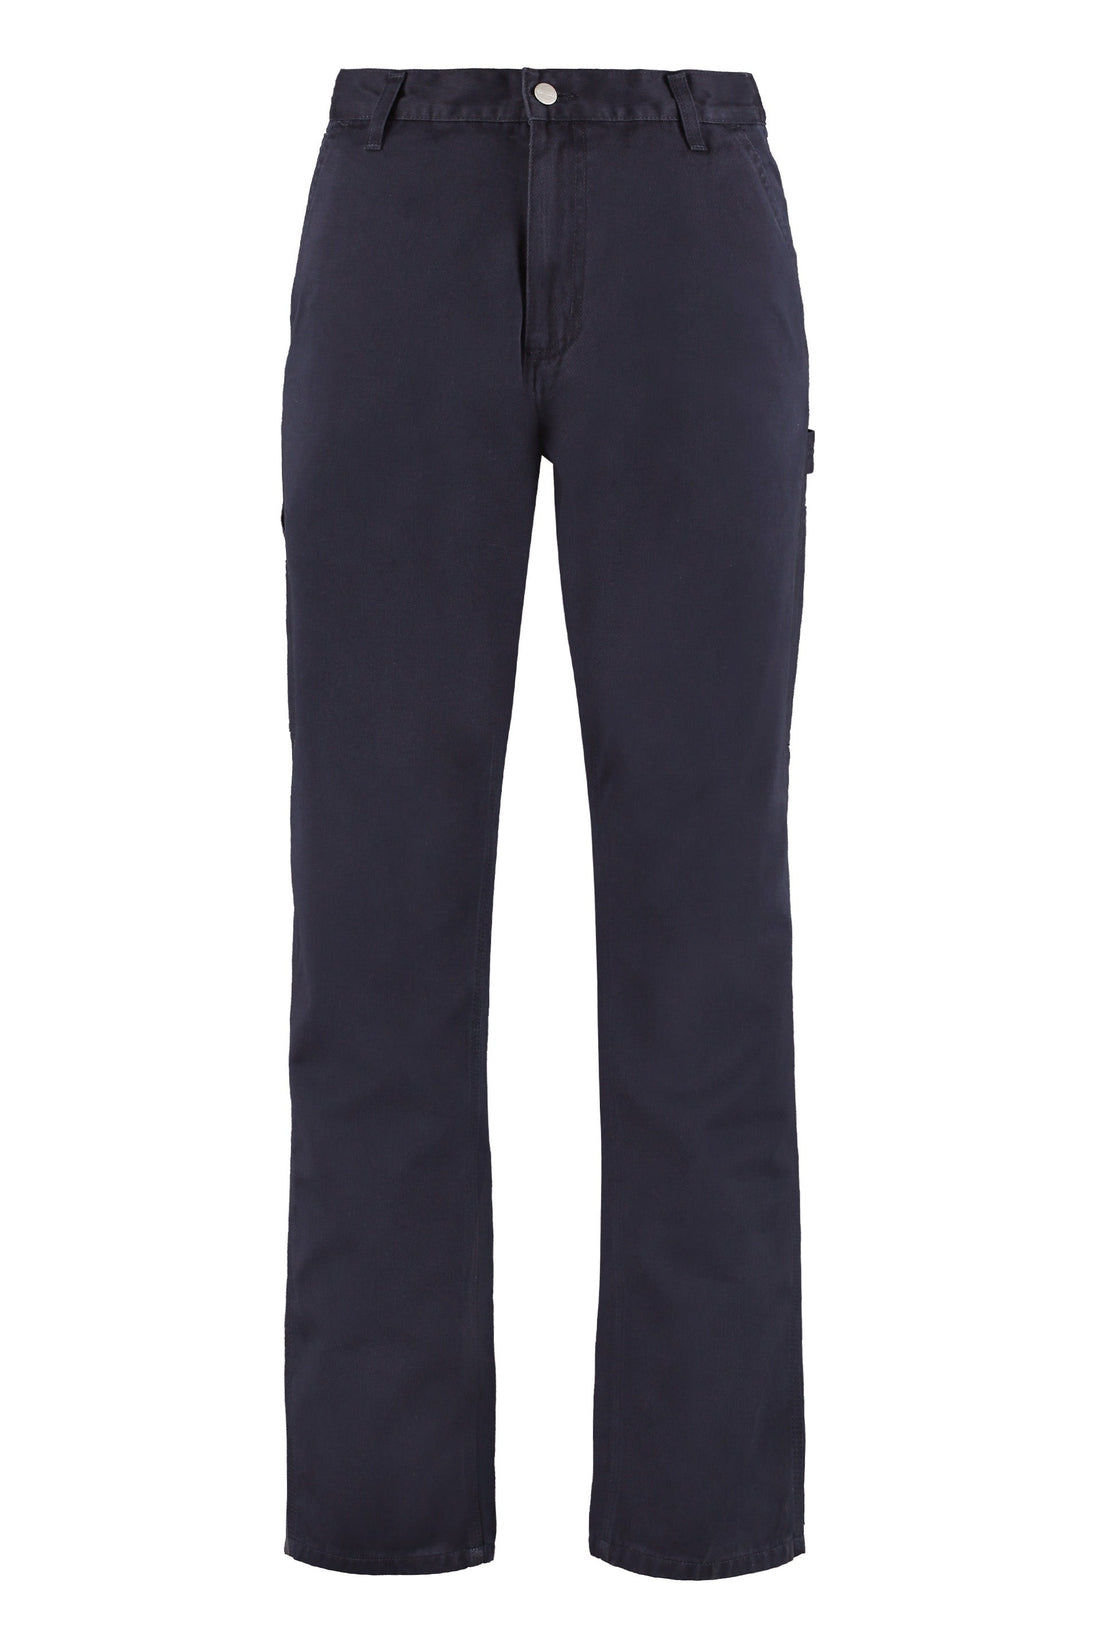 Carhartt-OUTLET-SALE-Ruck cotton trousers-ARCHIVIST